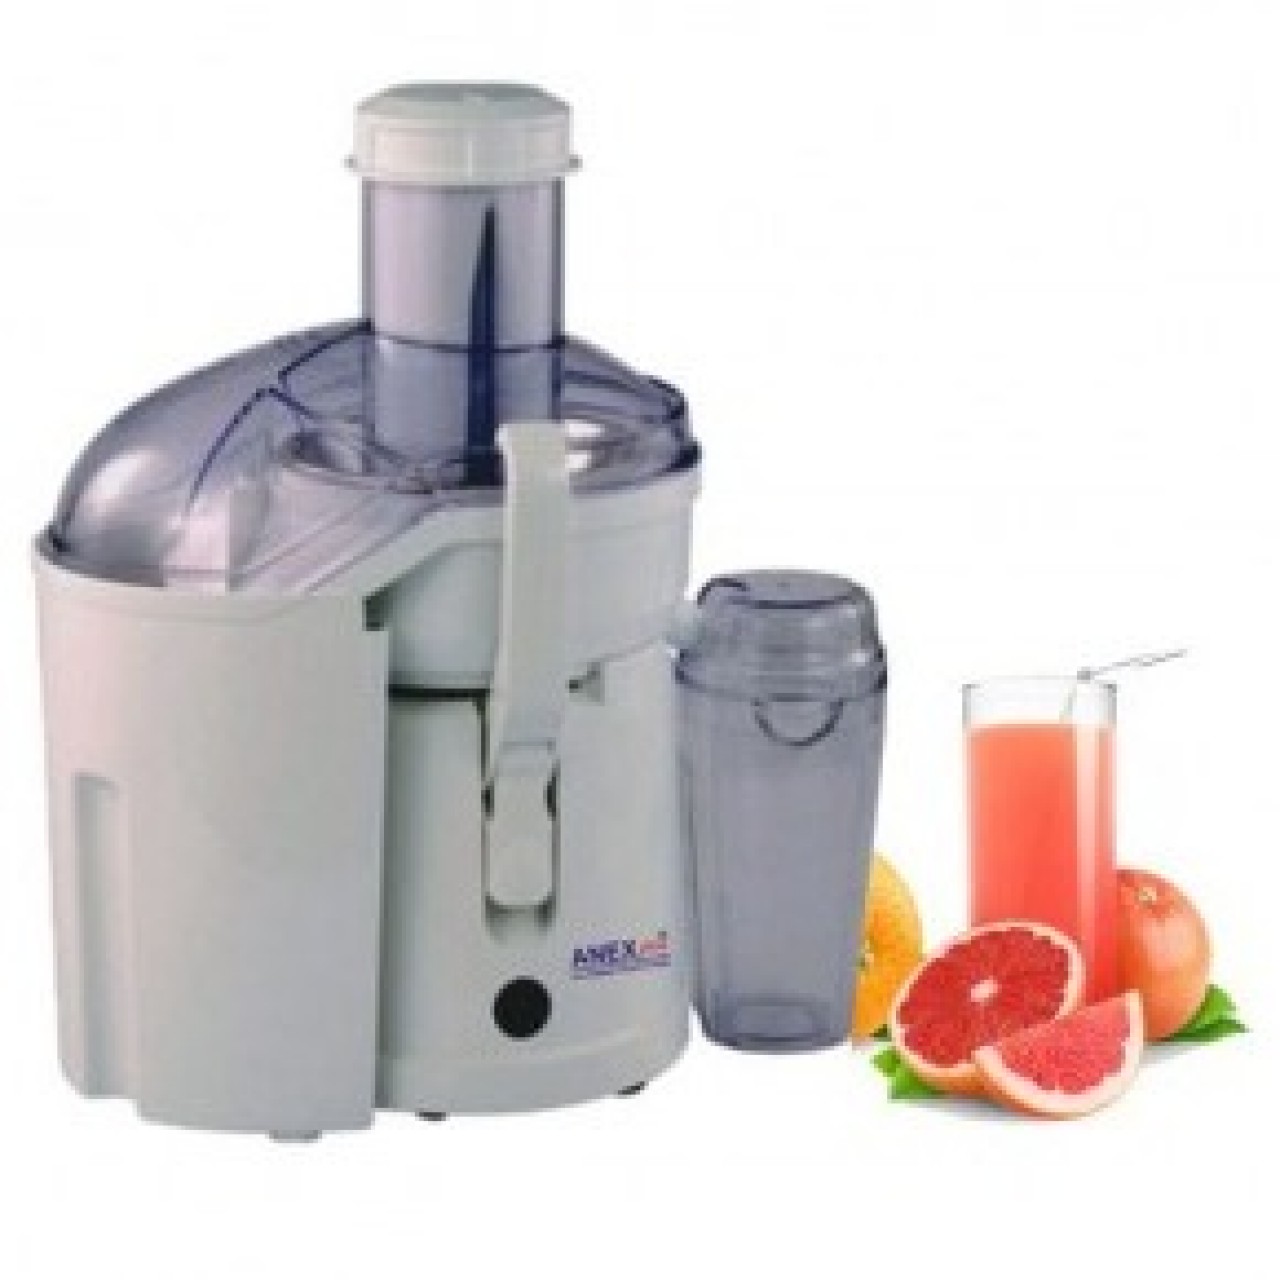 Anex Plus An-0188 Juice Extractor - Kitchen Appliances